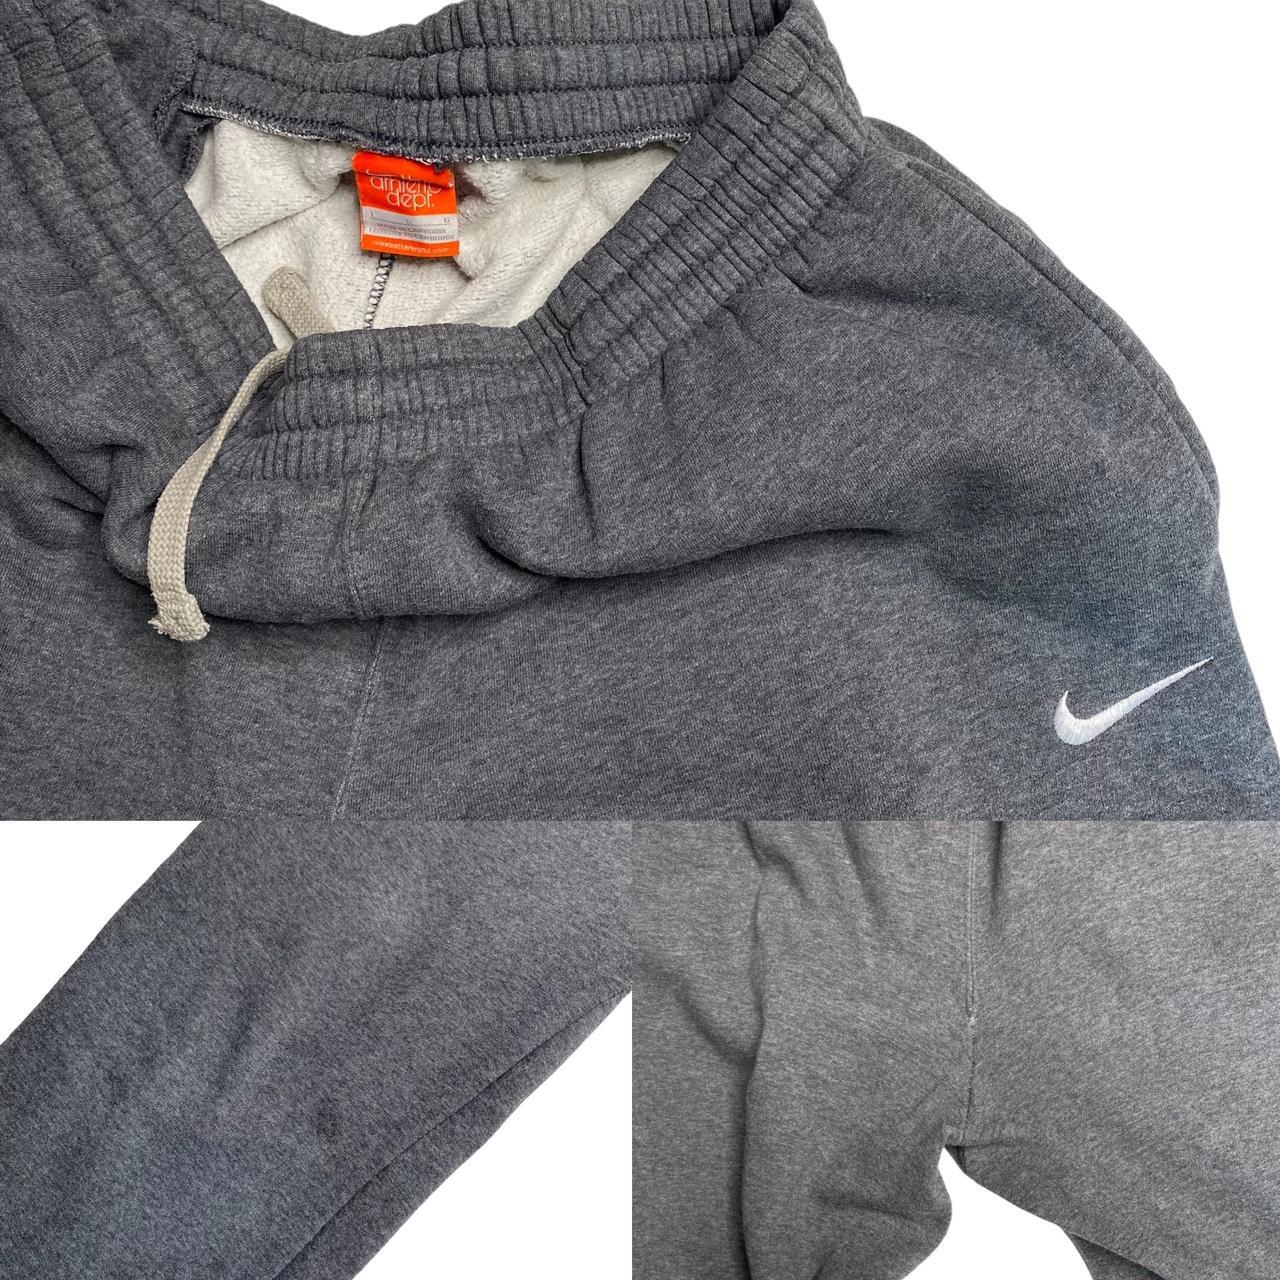 Retro Nike Athletic grey joggers tracksuit bottoms -... - Depop